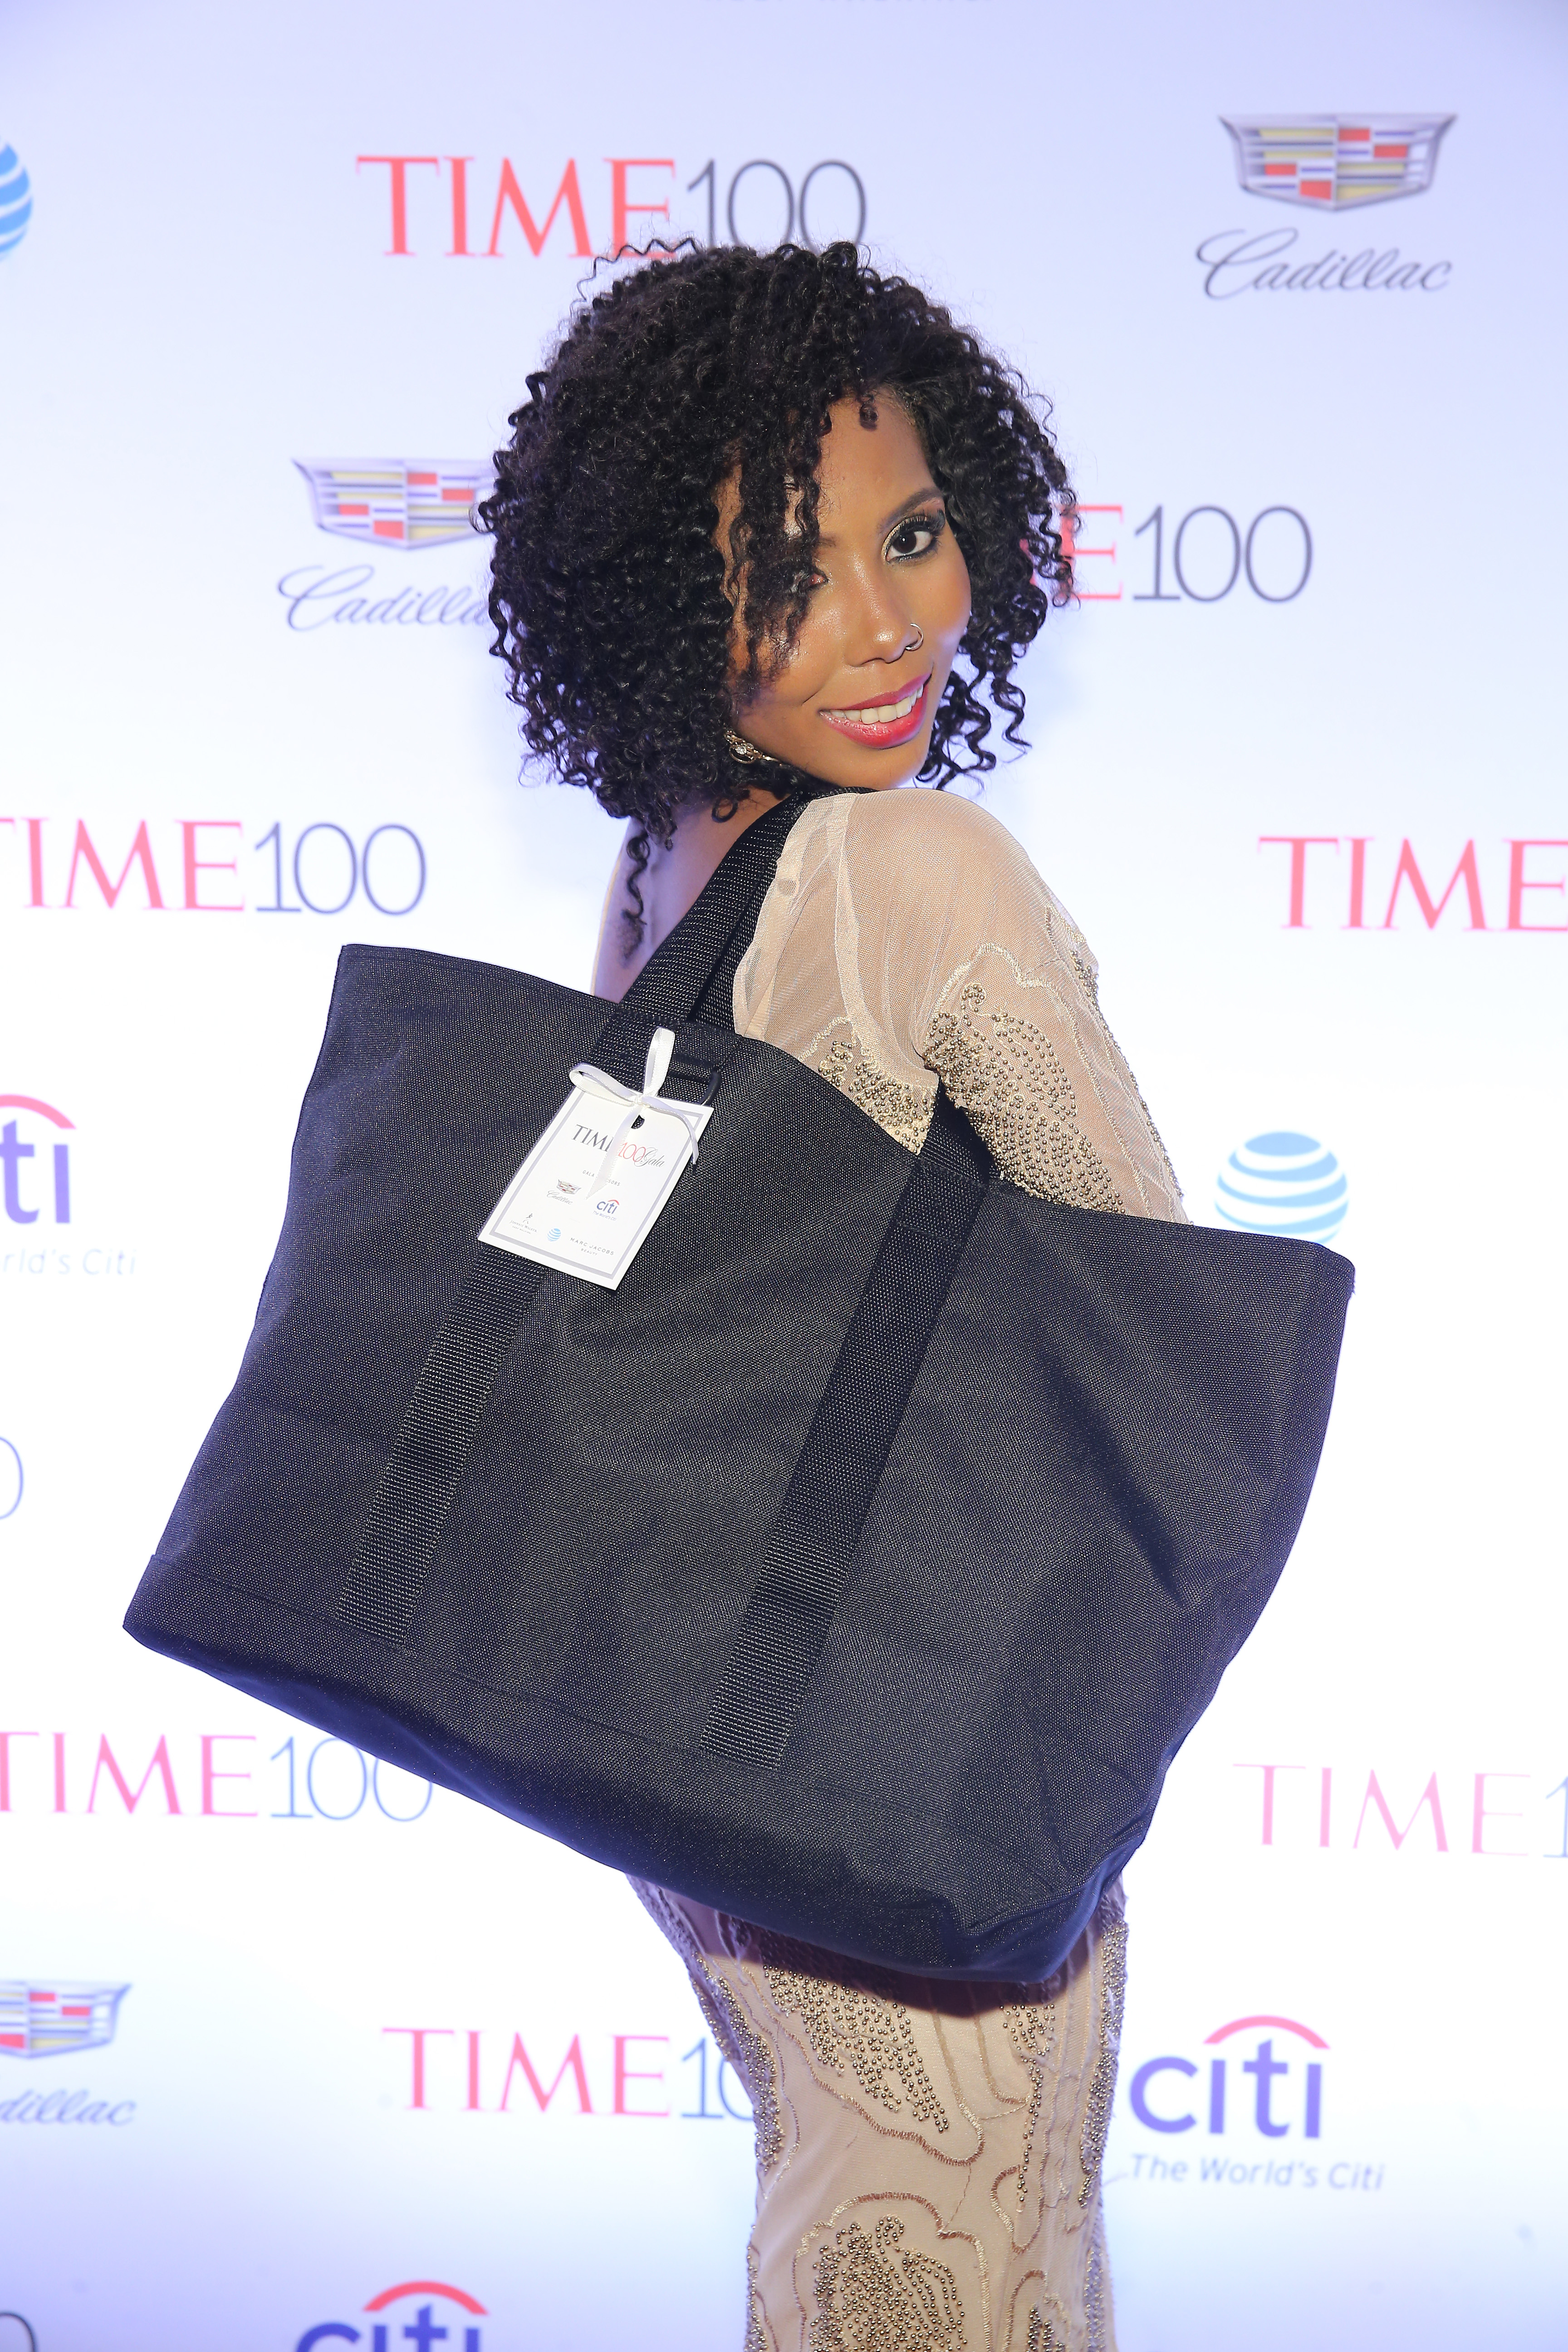 Jaha Dukureh at the TIME 100 gala in New York on April 26, 2016.